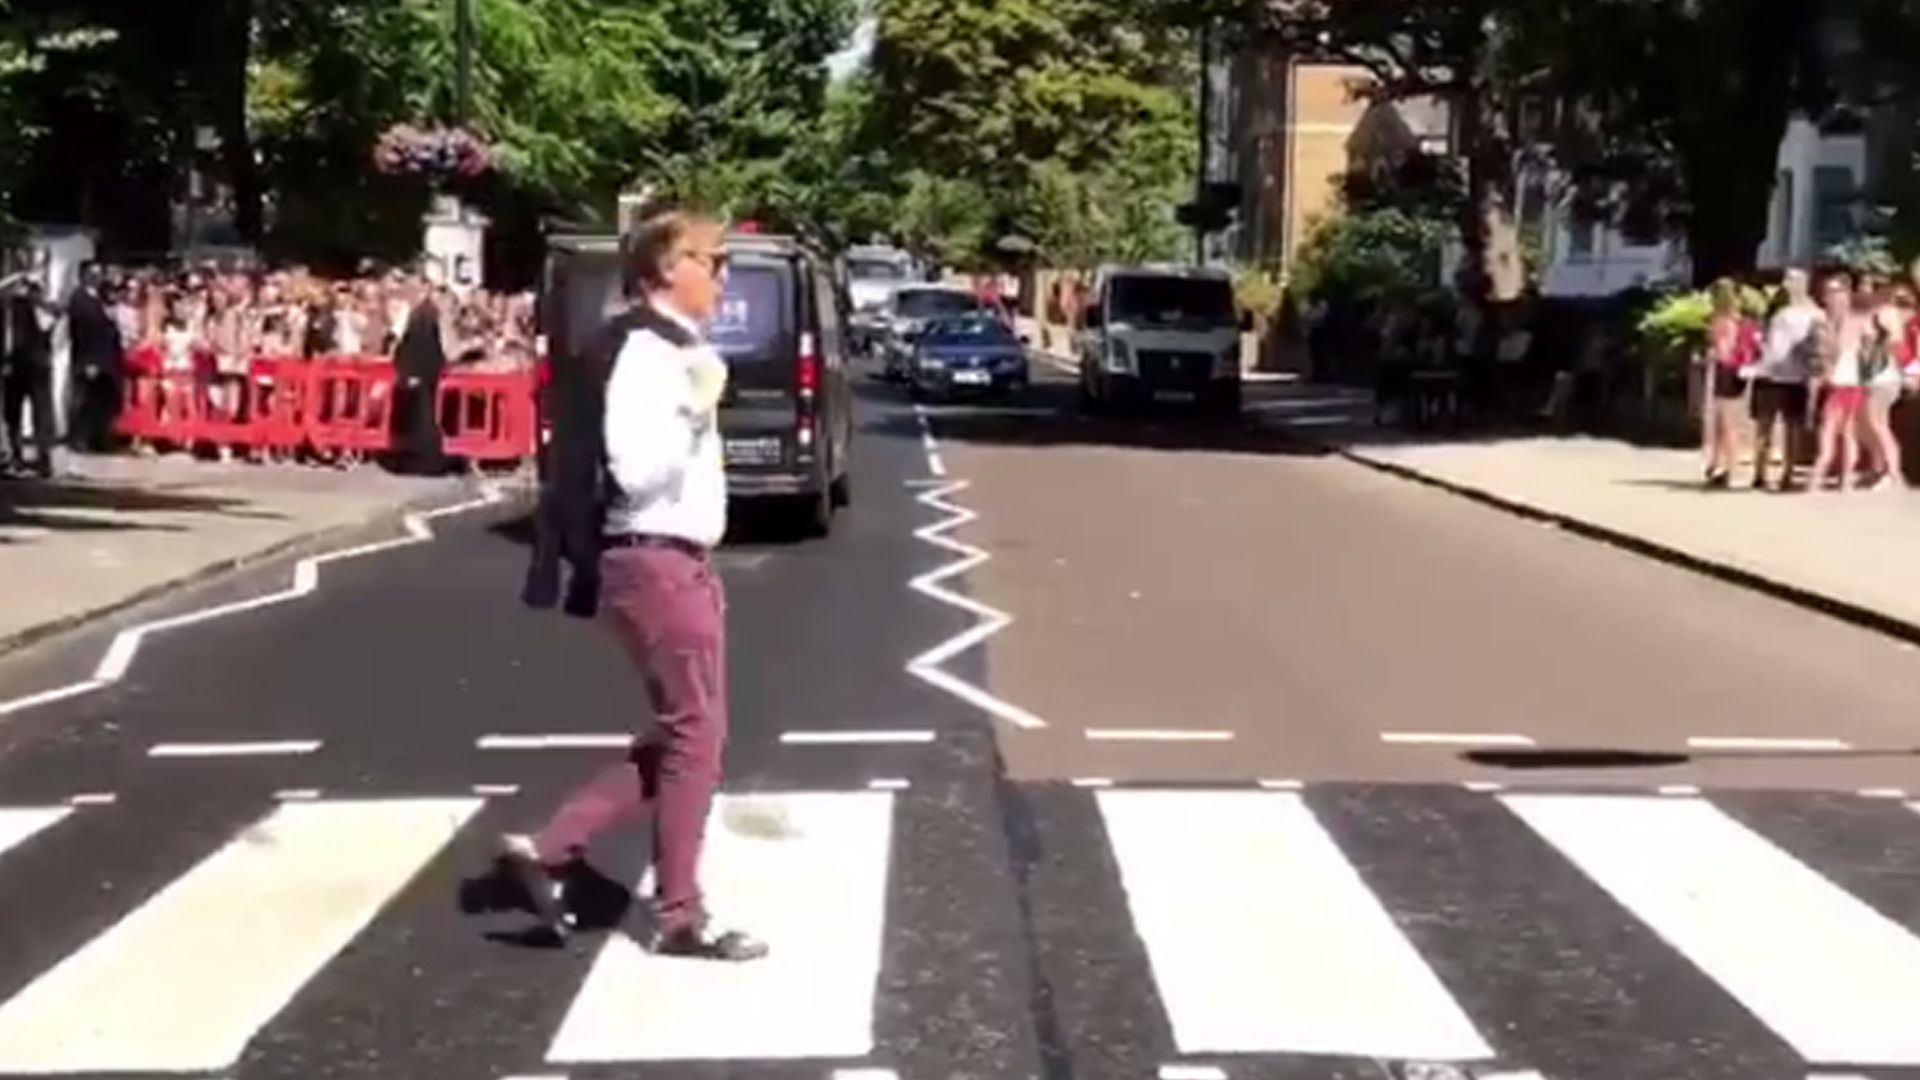 Paul McCartney Re Creates The Beatles' Famous 'Abbey Road' Street